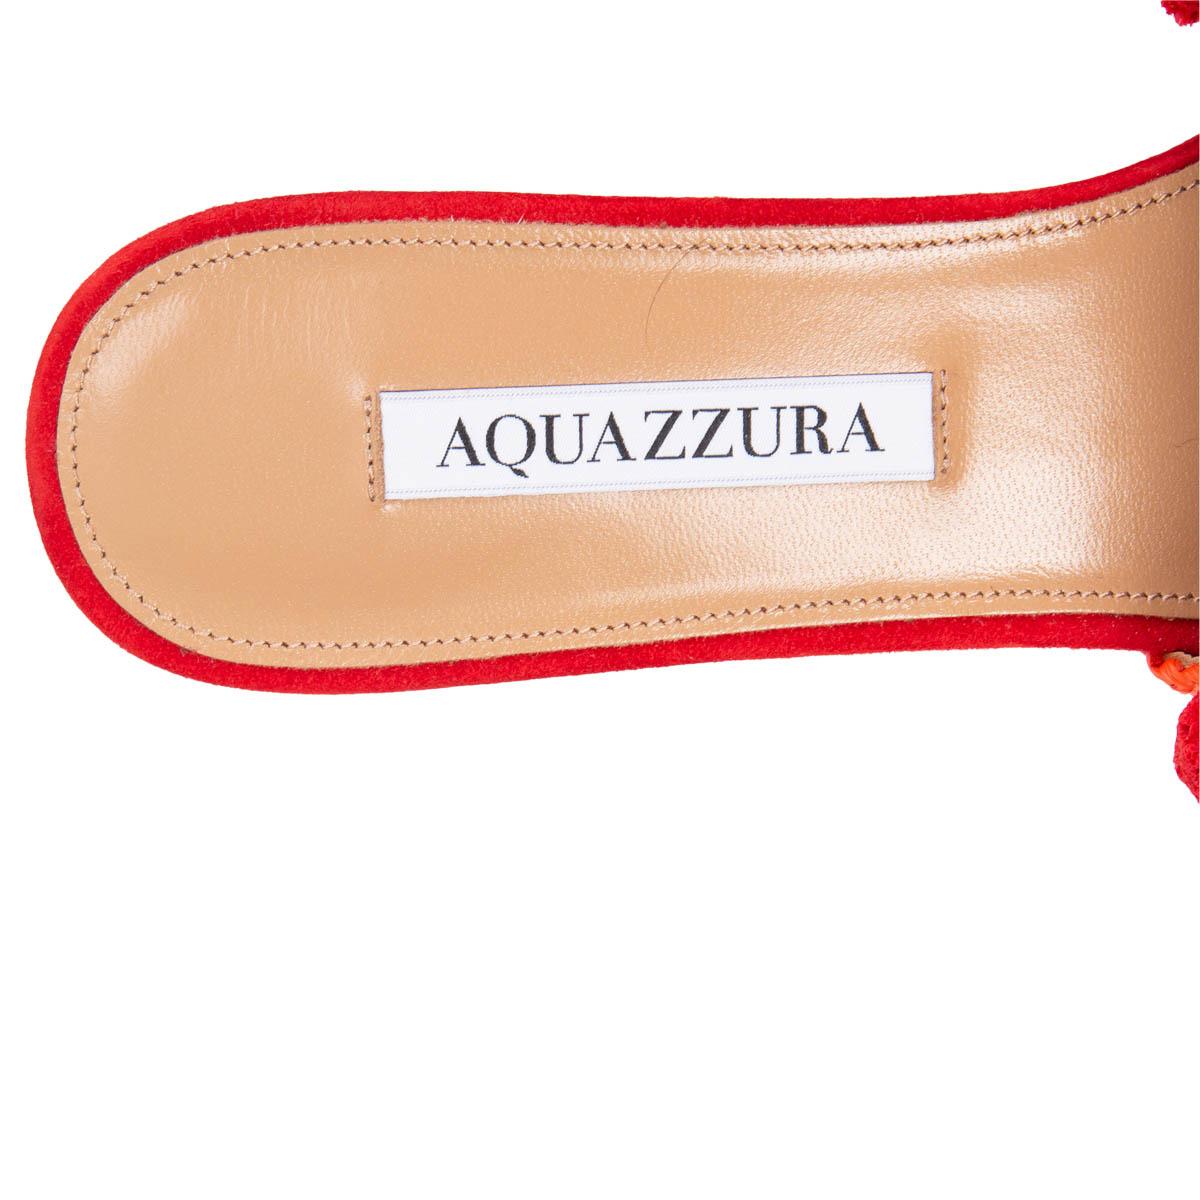 AQUAZZURA orange red RAFFIA POMPOM Slides Flat Sandals Shoes 37.5 For Sale 1